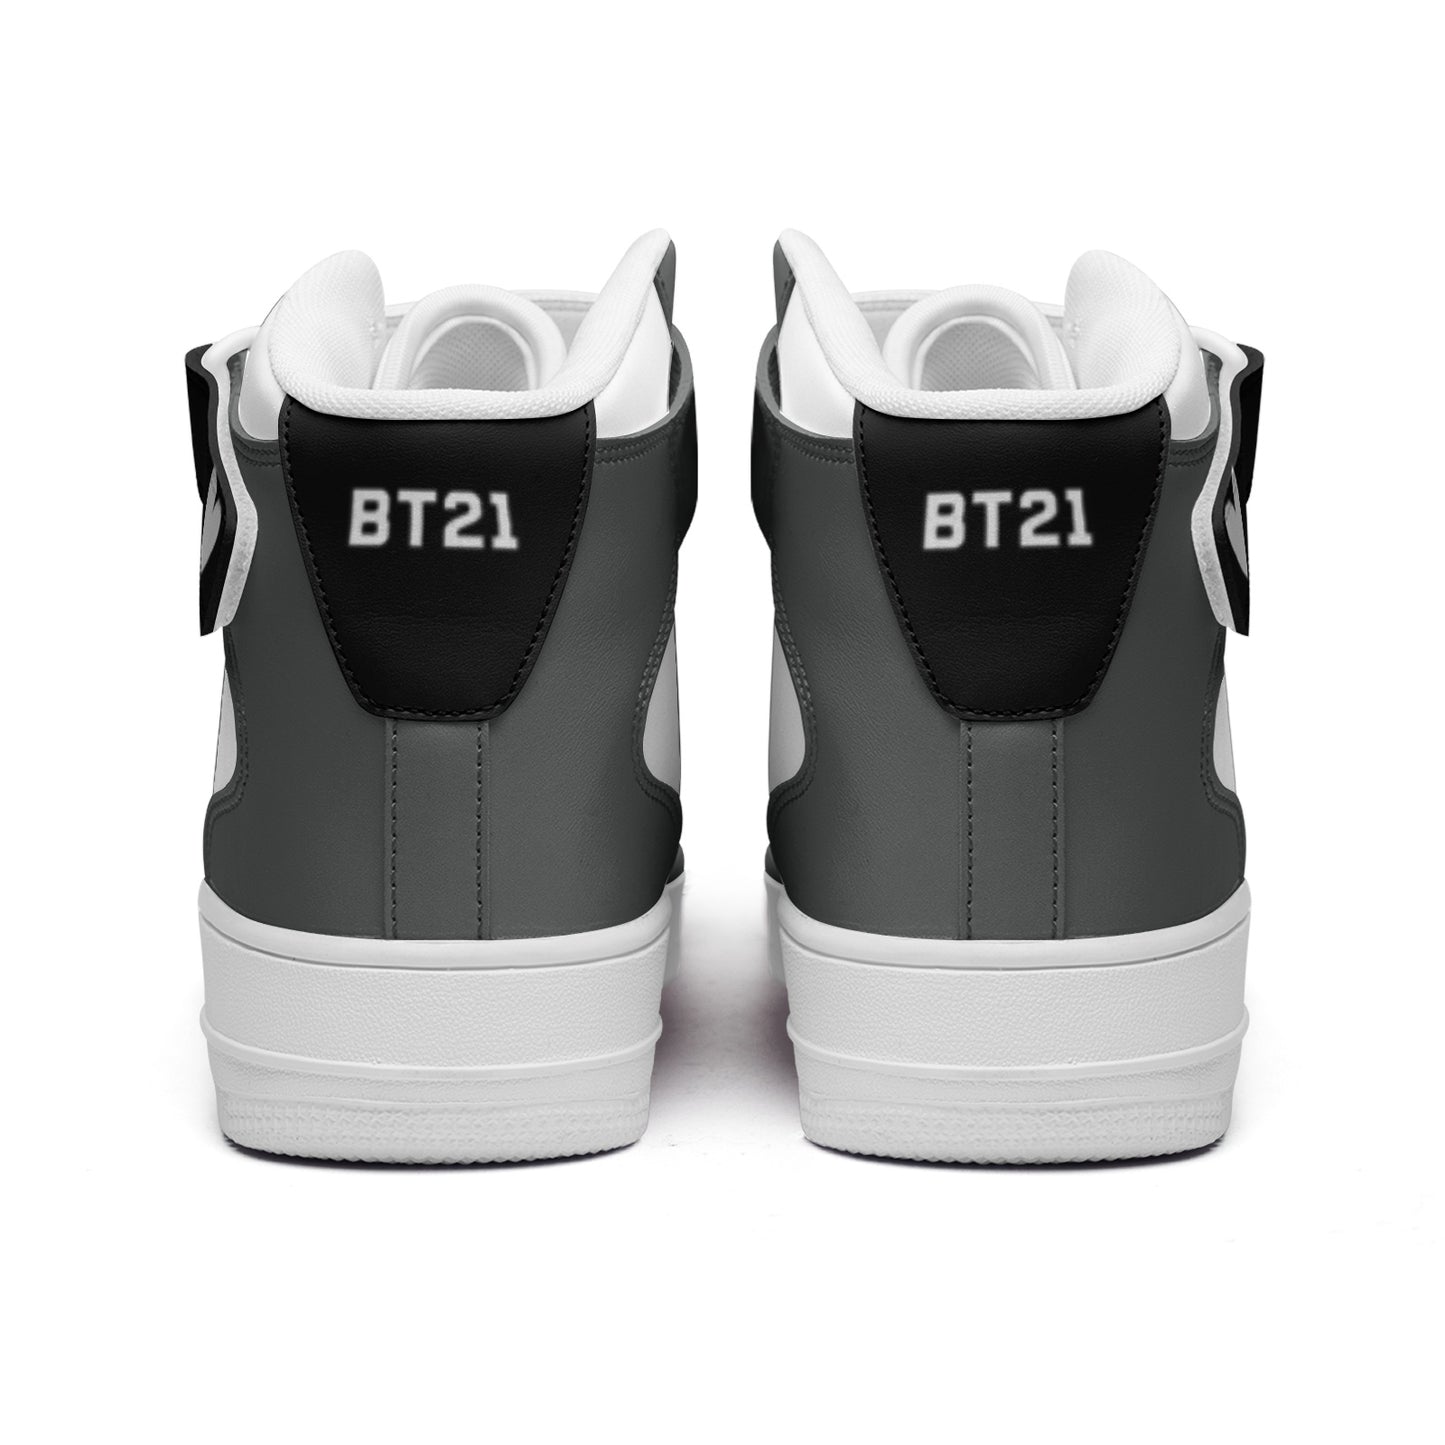 BT21 Van Unisex high Top Leather Sneakers